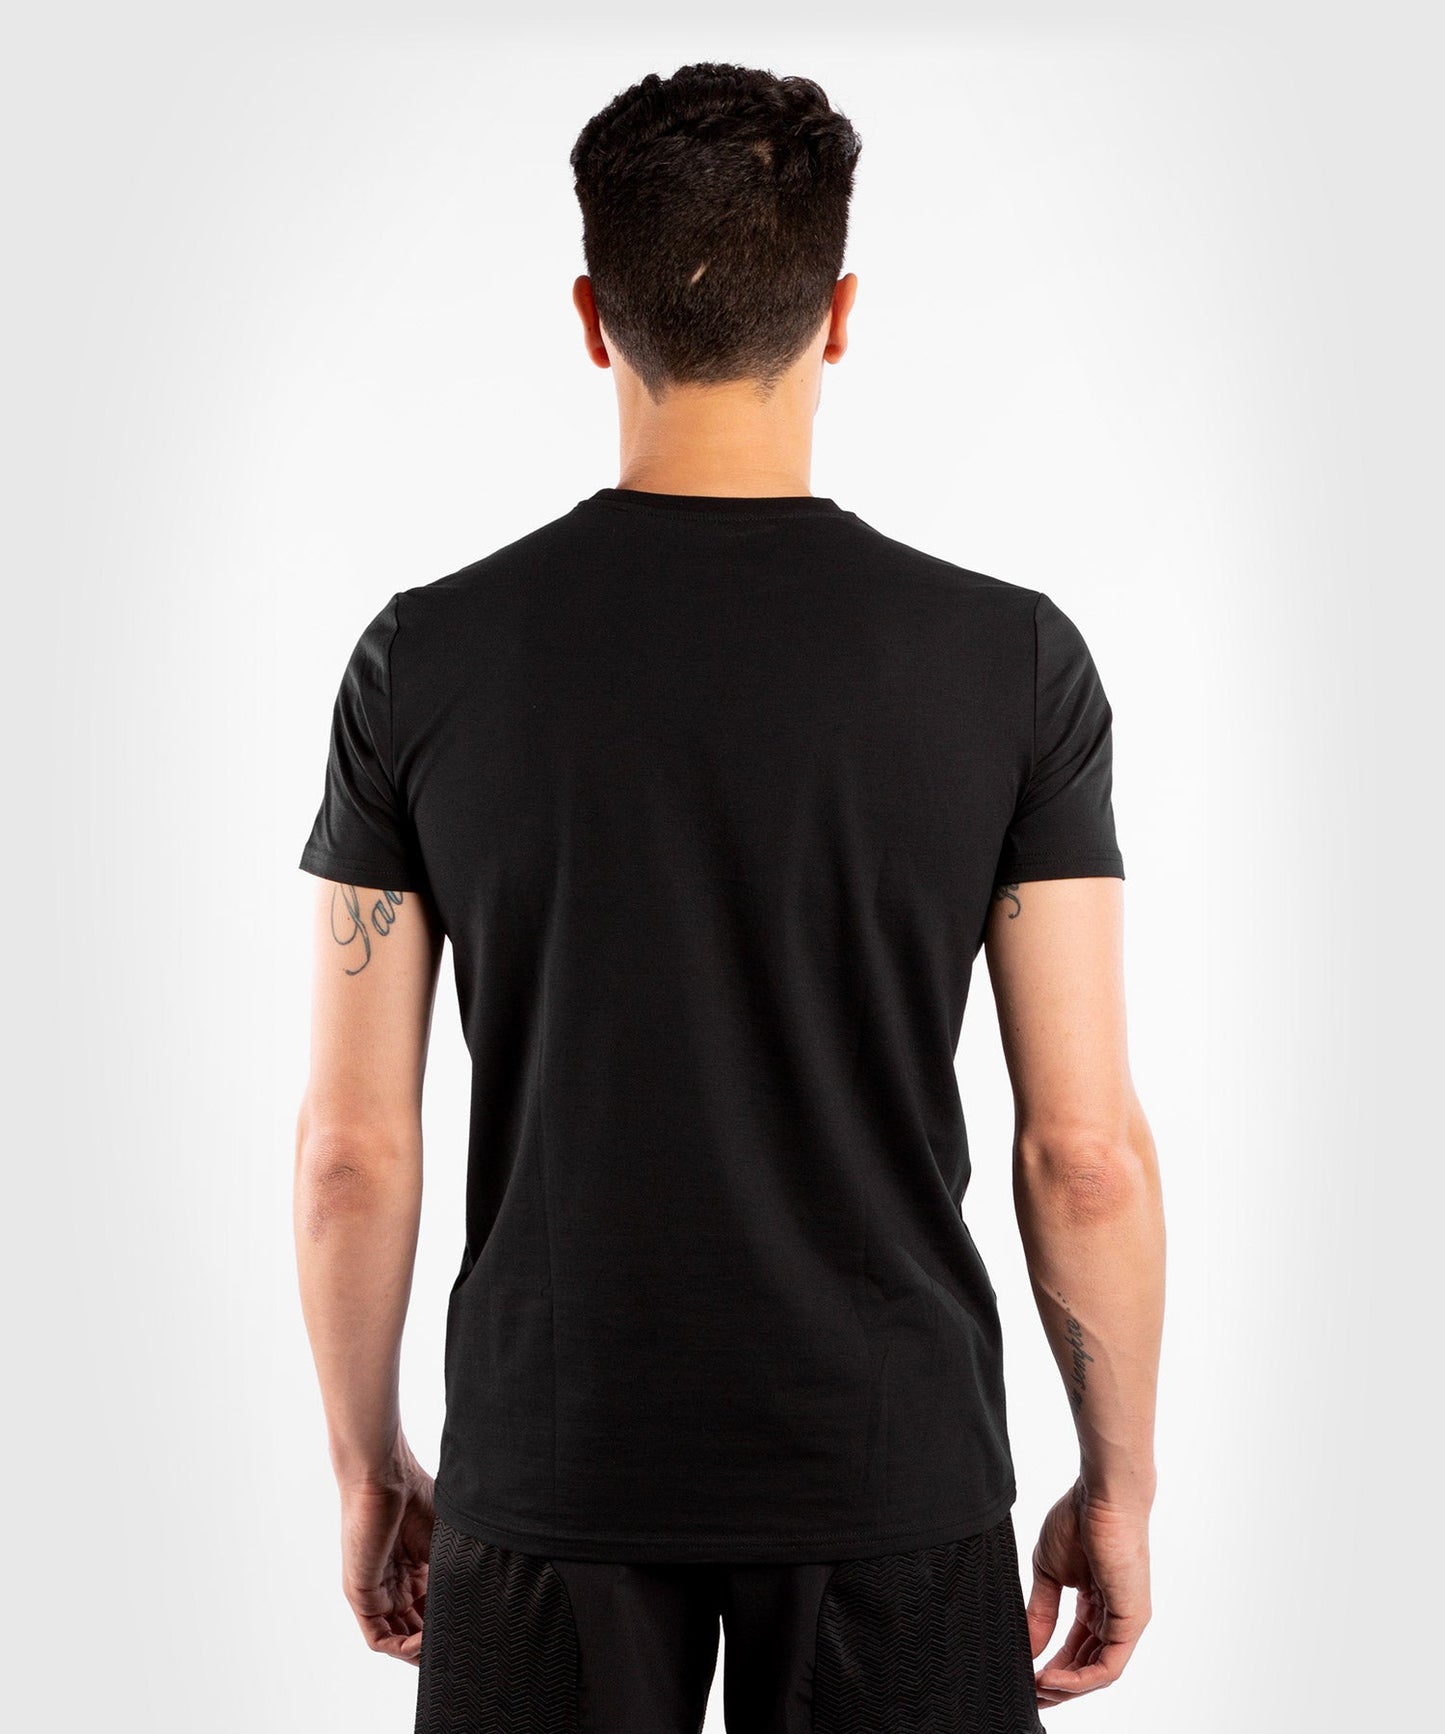 Venum Classic T-shirt - Black/Black